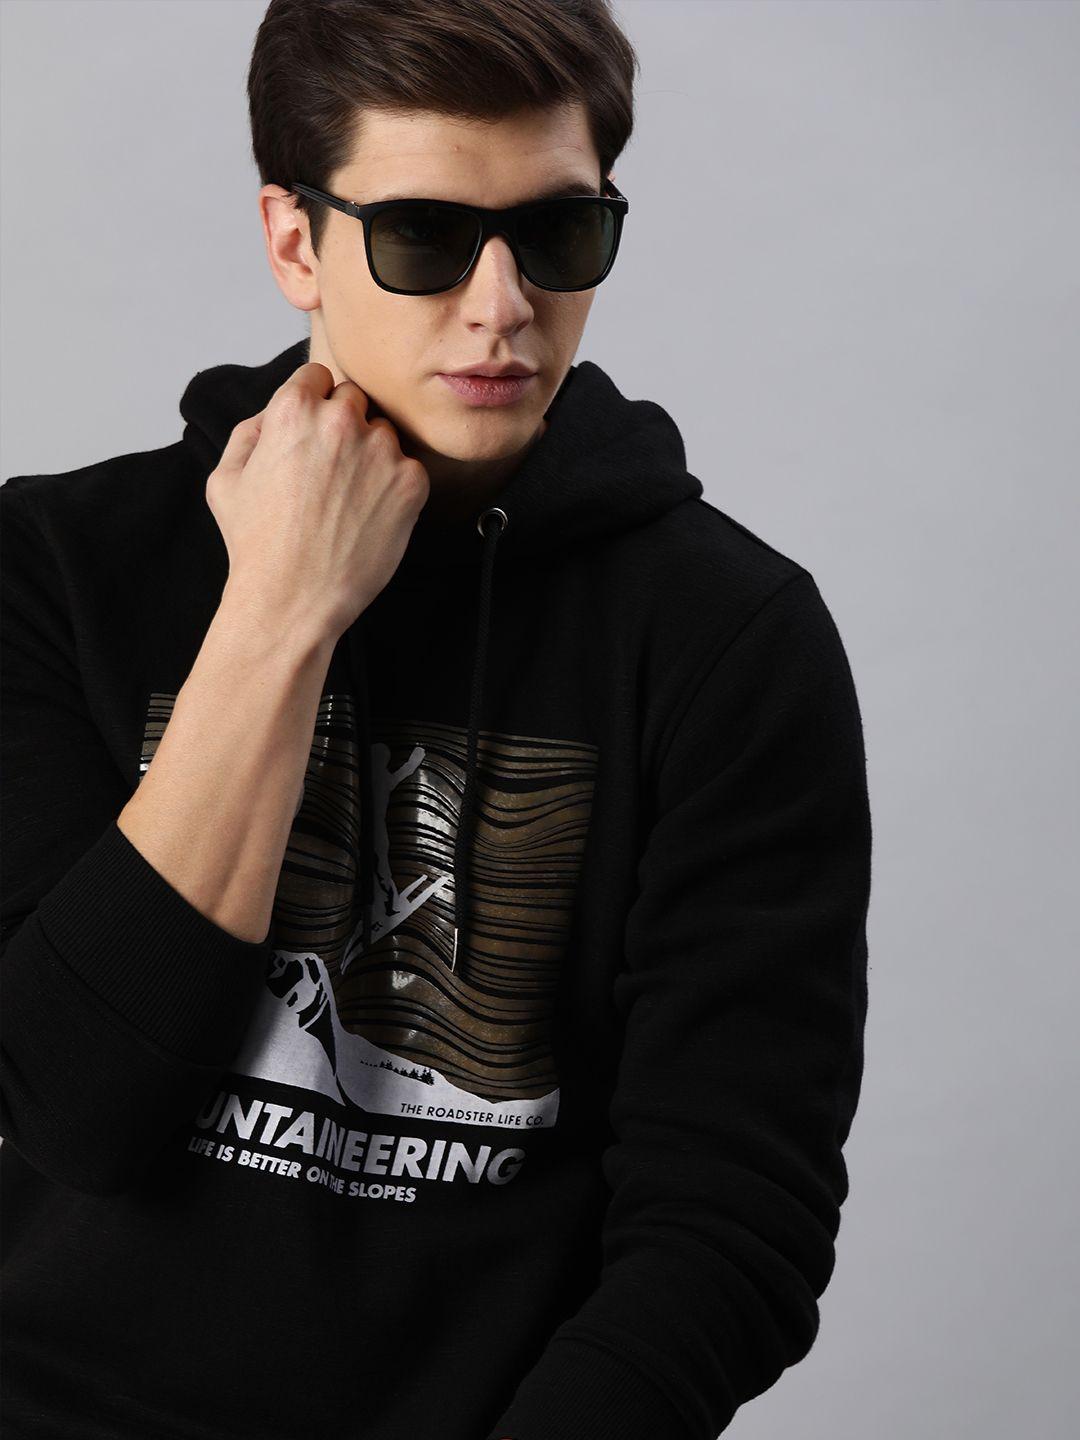 the roadster lifestyle co men black & white printed hooded sweatshirt